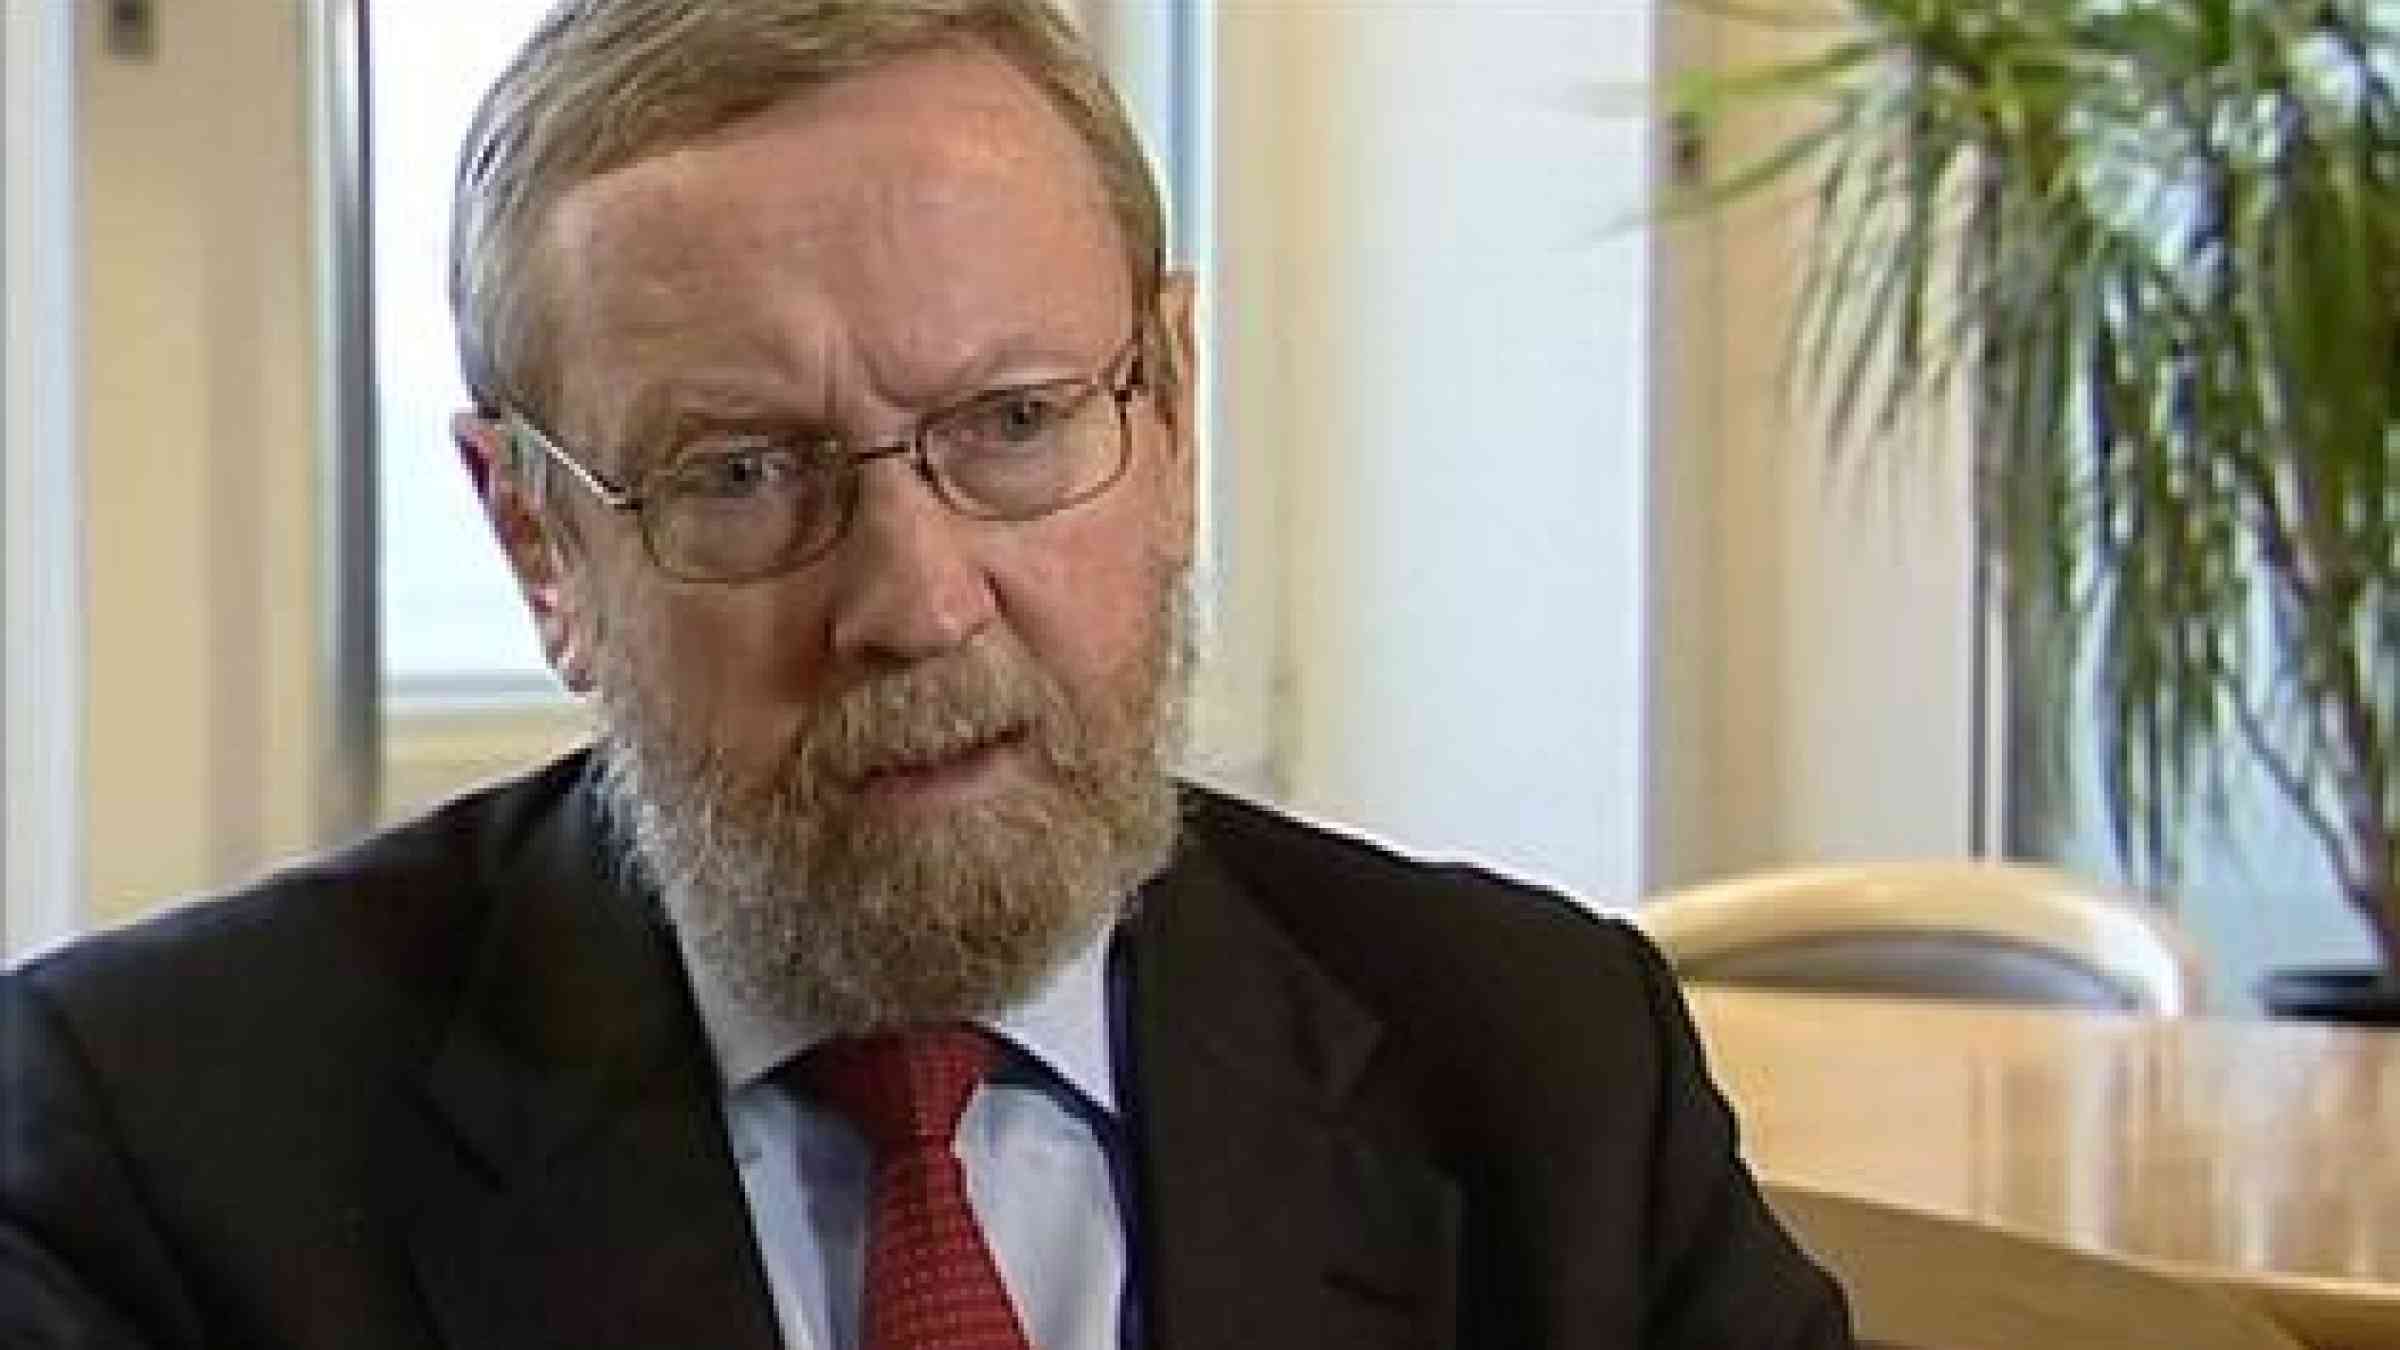 Professor Sir John Beddington, the UK government's chief scientific adviser